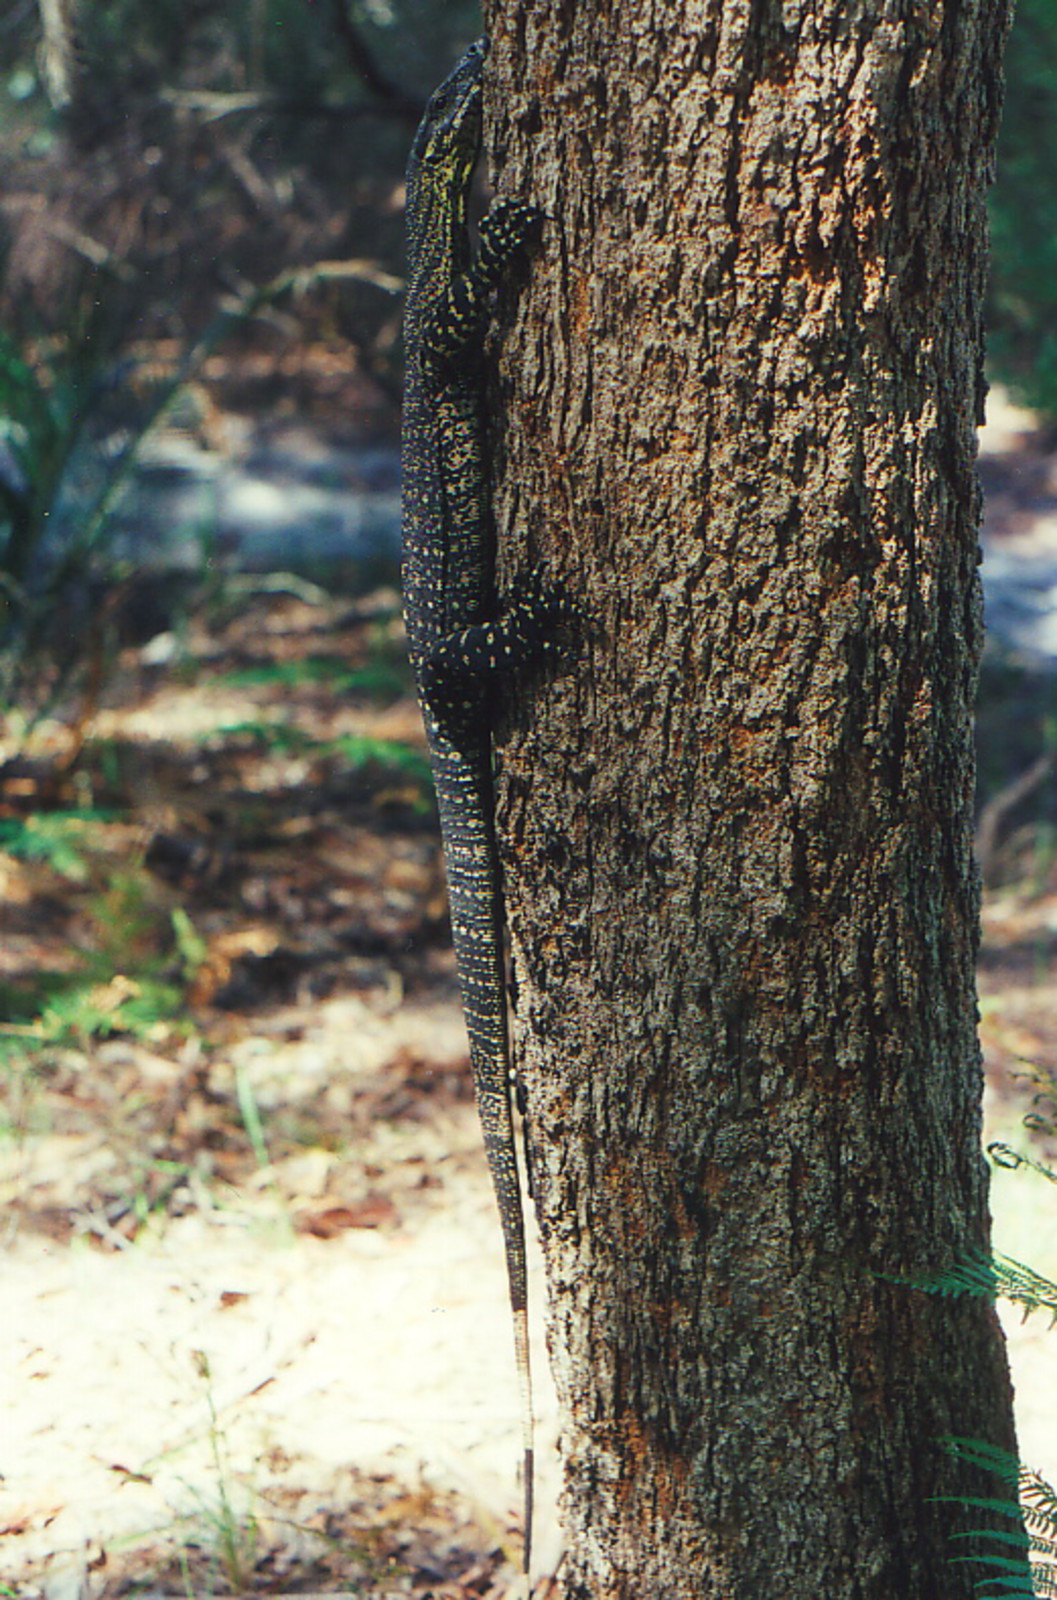 A goanna hanging on to a tree